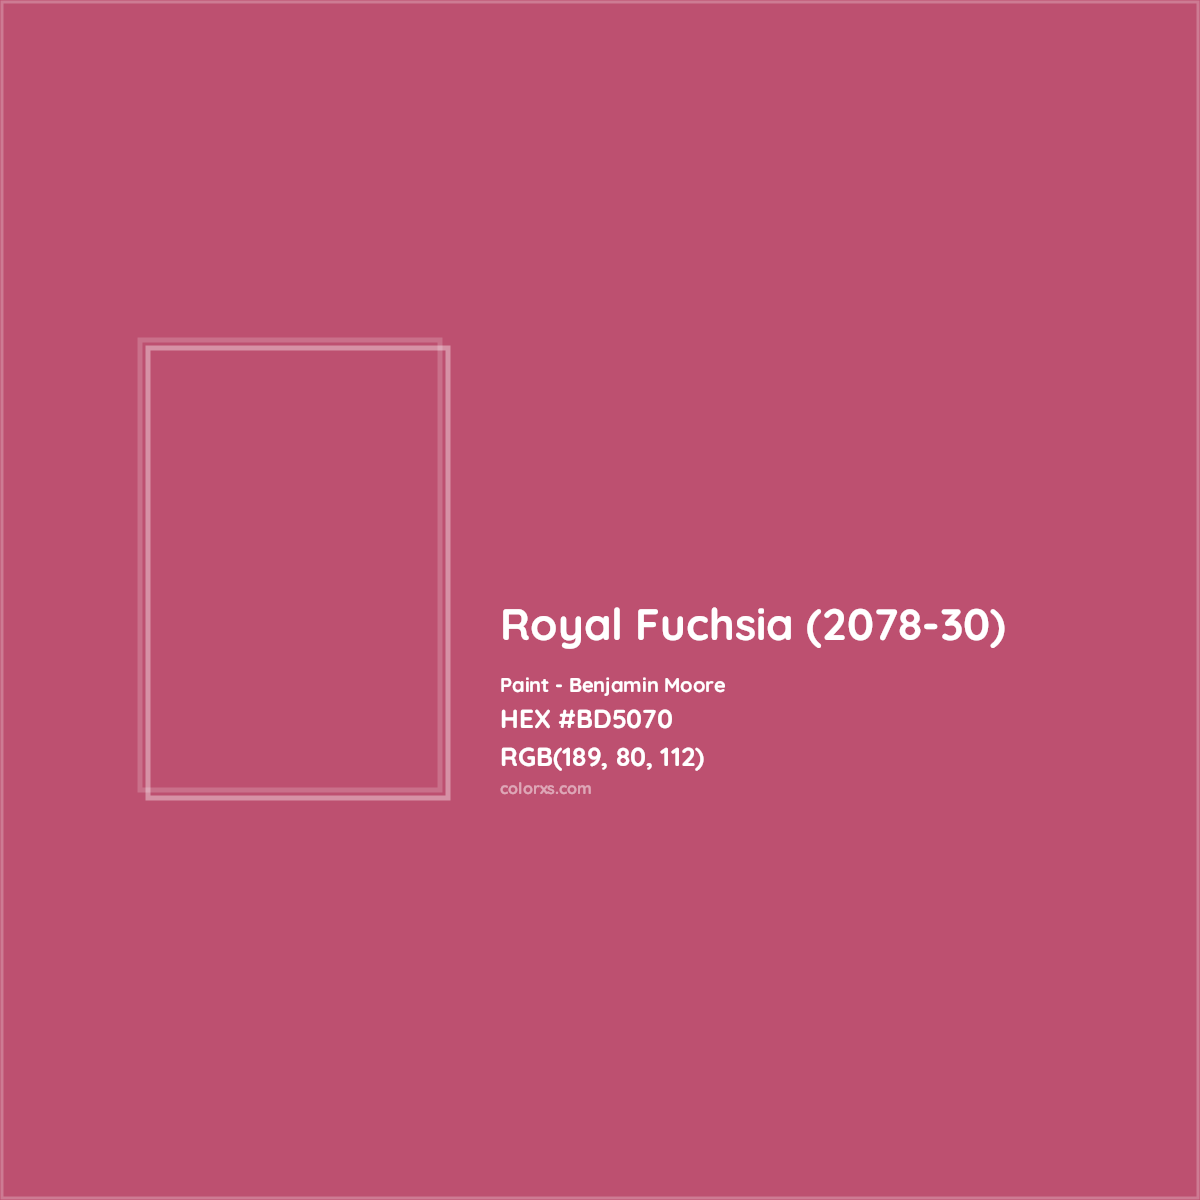 HEX #BD5070 Royal Fuchsia (2078-30) Paint Benjamin Moore - Color Code